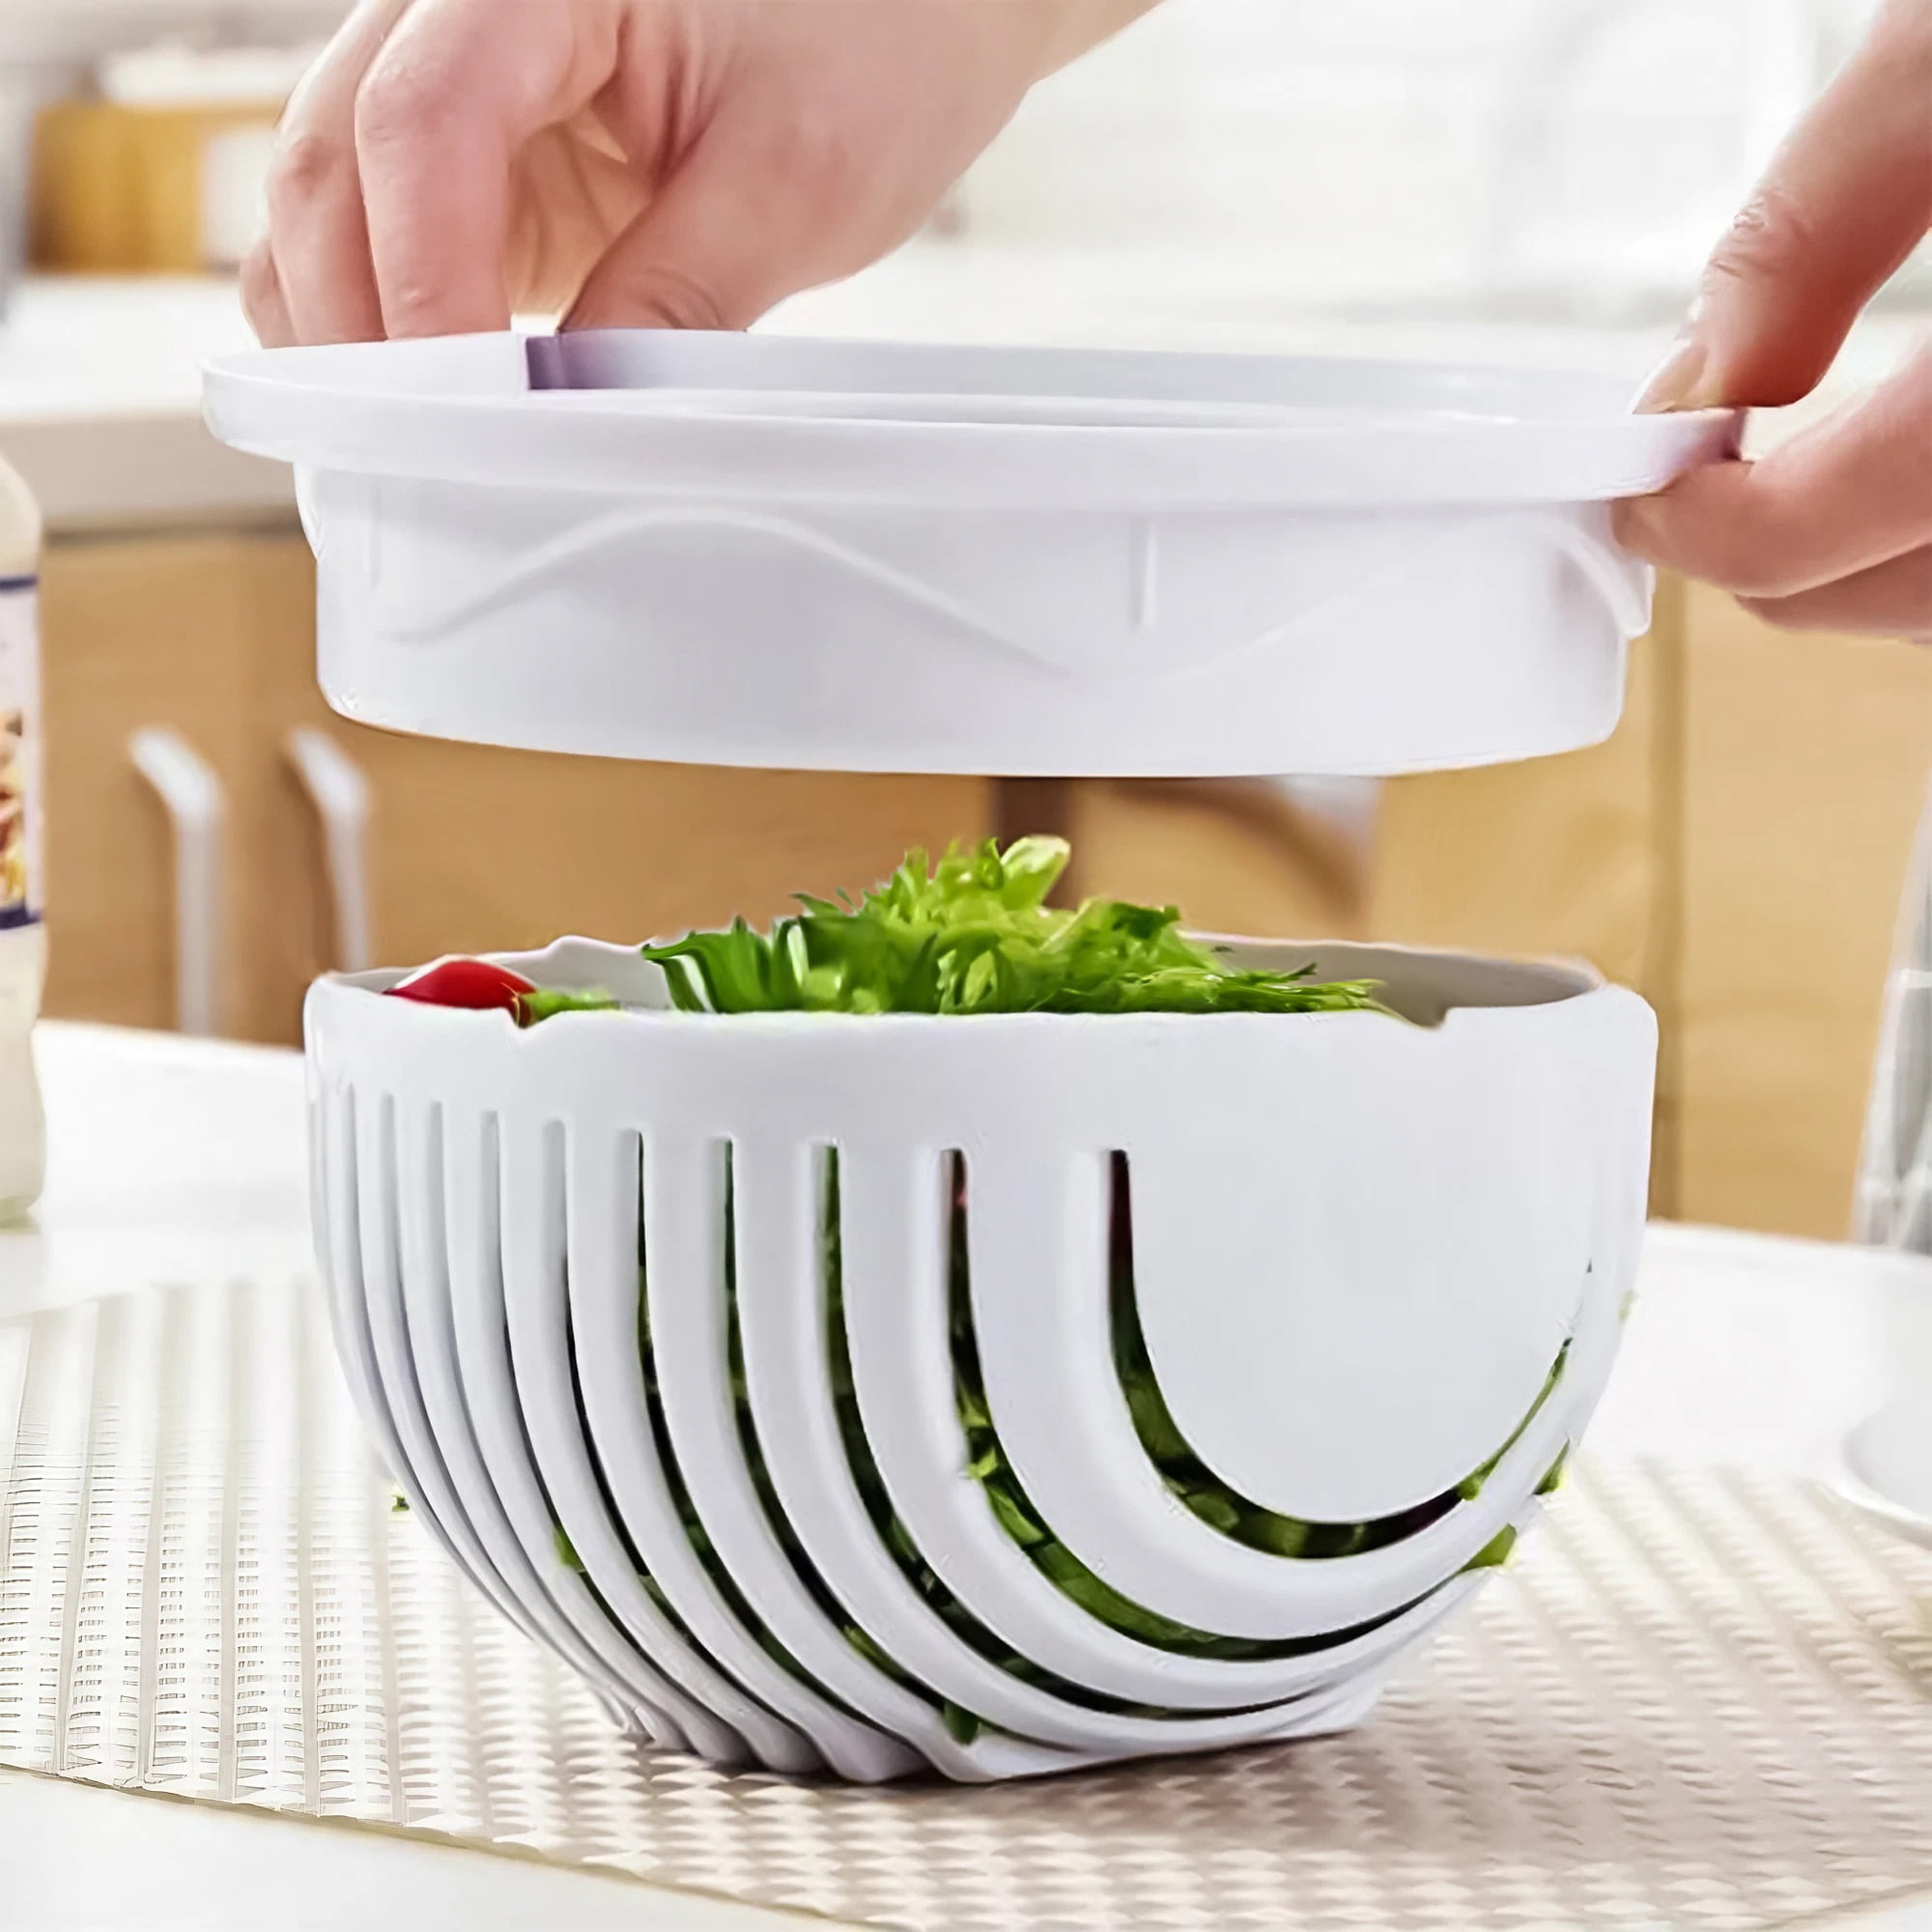 1 Minute Salad Cutter bowl Veg & Fruit Chopper Easy, Fast, Clean Finish